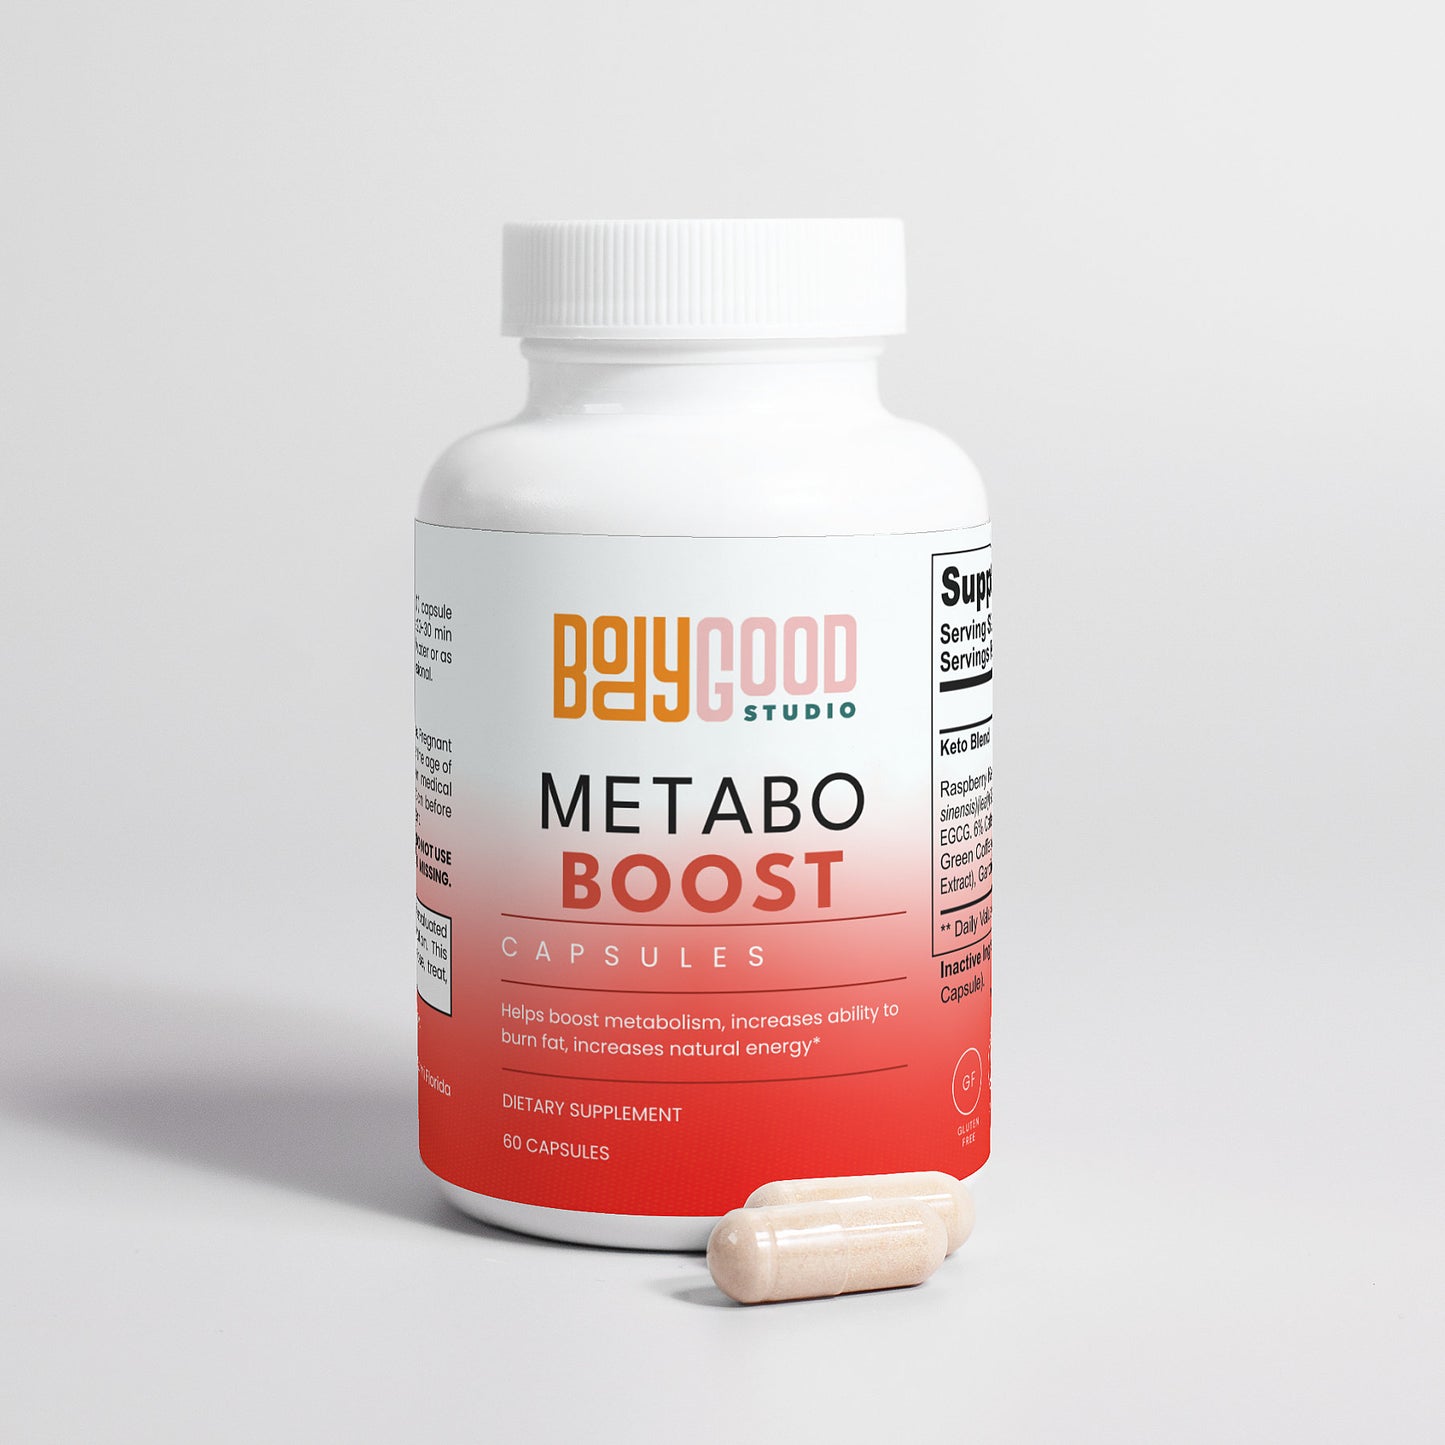 Metabolism Control Bundle - $72